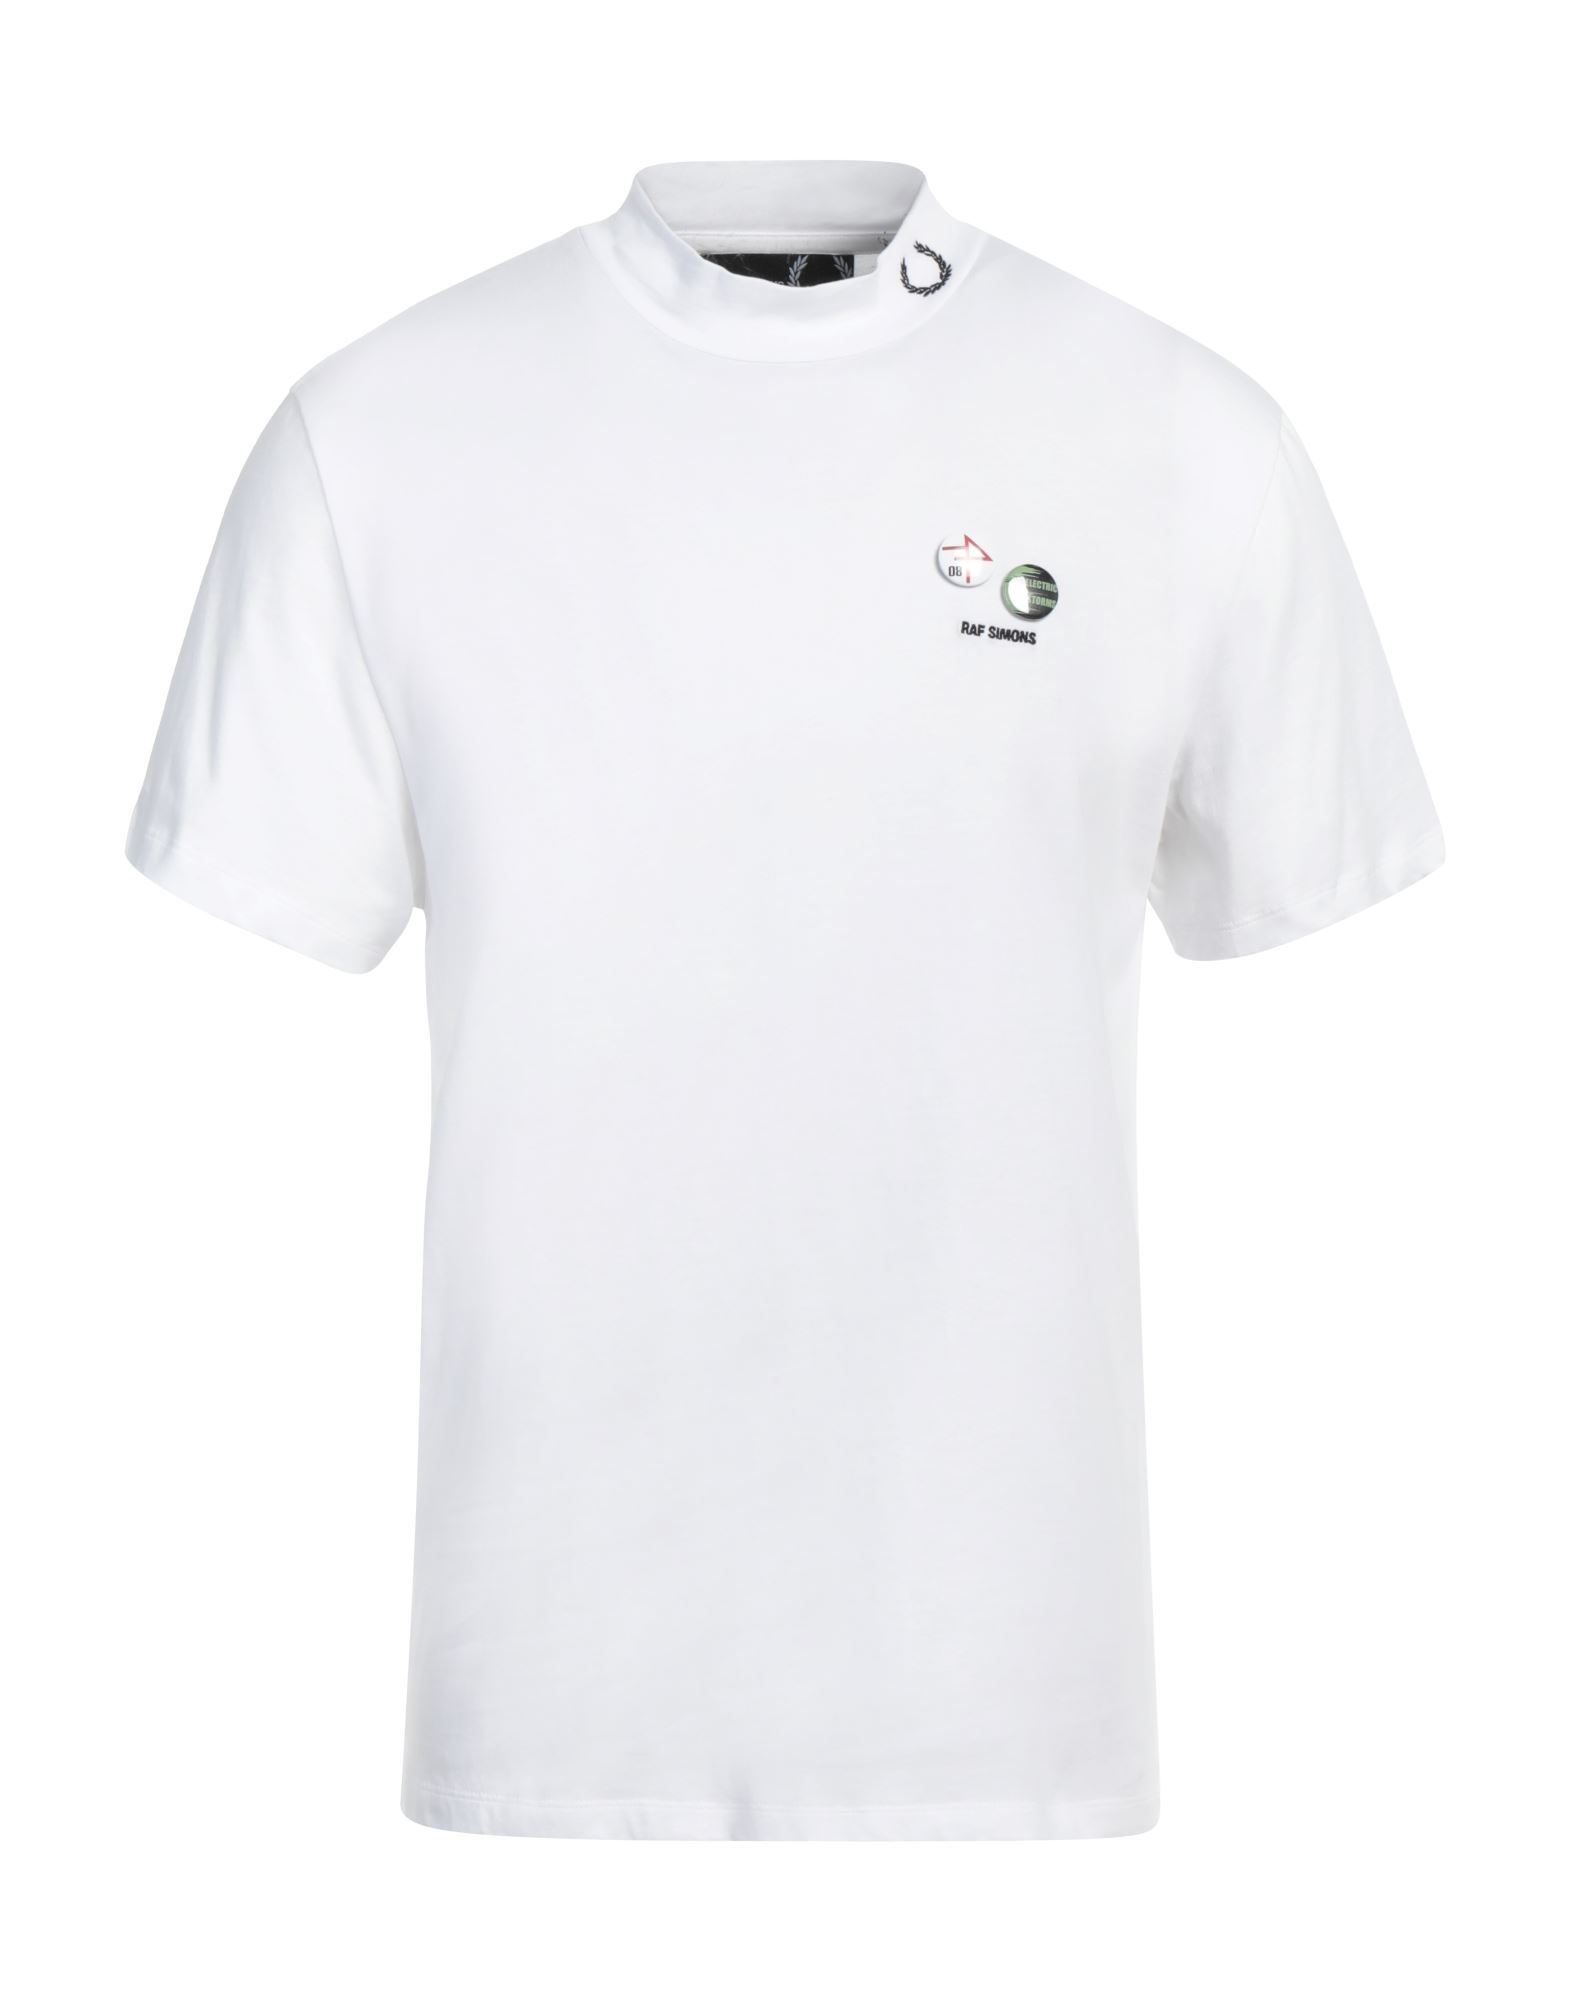 RAF SIMONS T-shirts Herren Weiß von RAF SIMONS